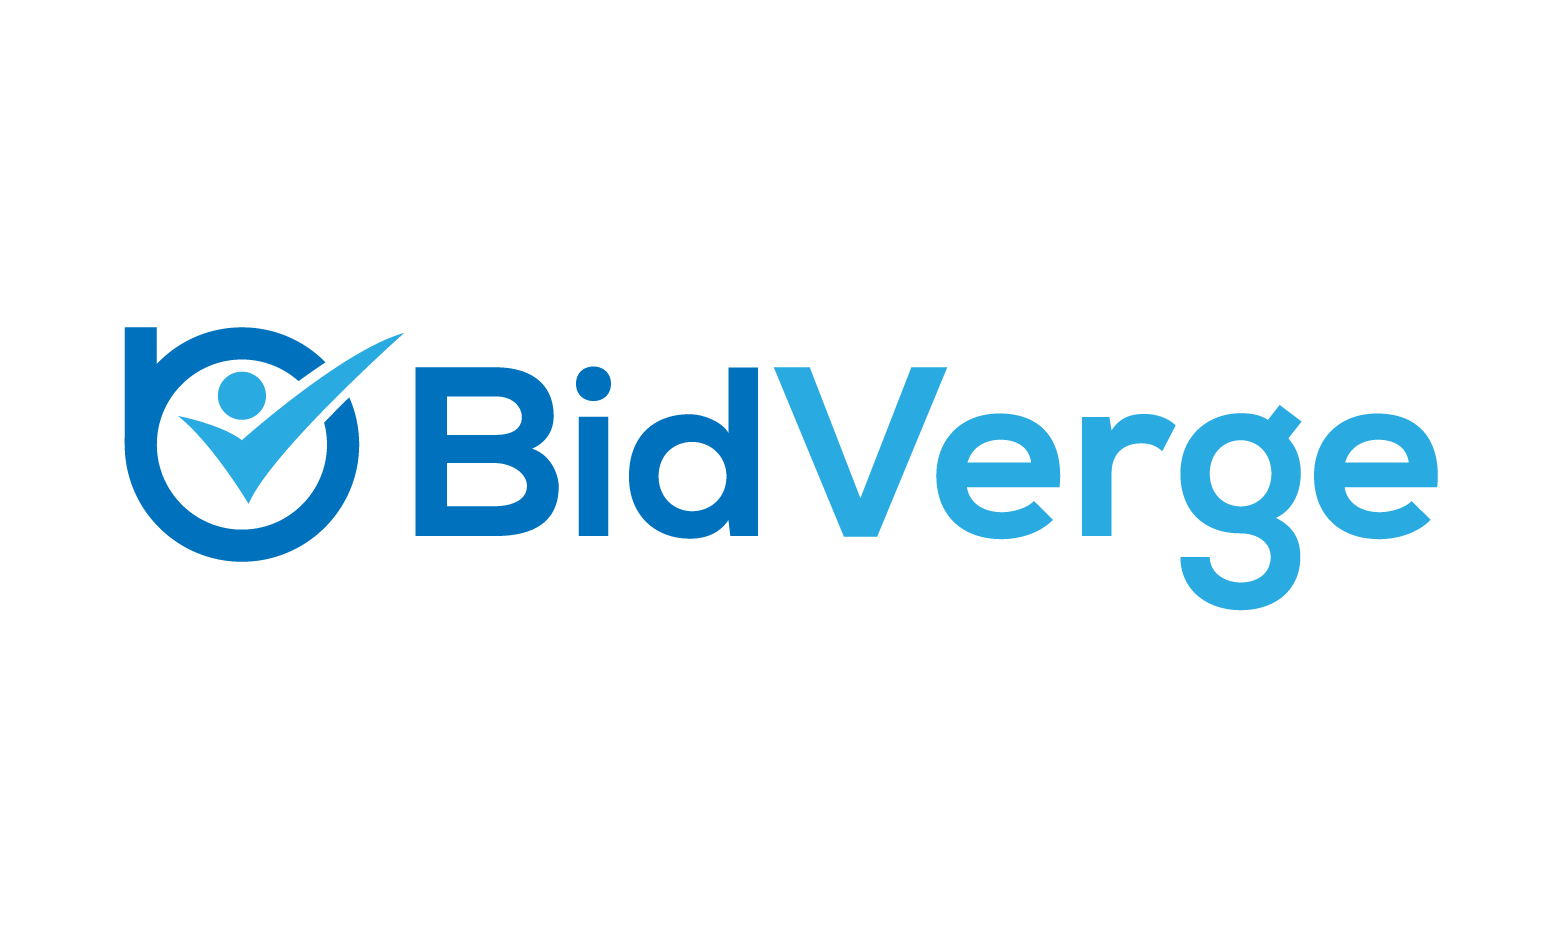 BidVerge.com - Creative brandable domain for sale